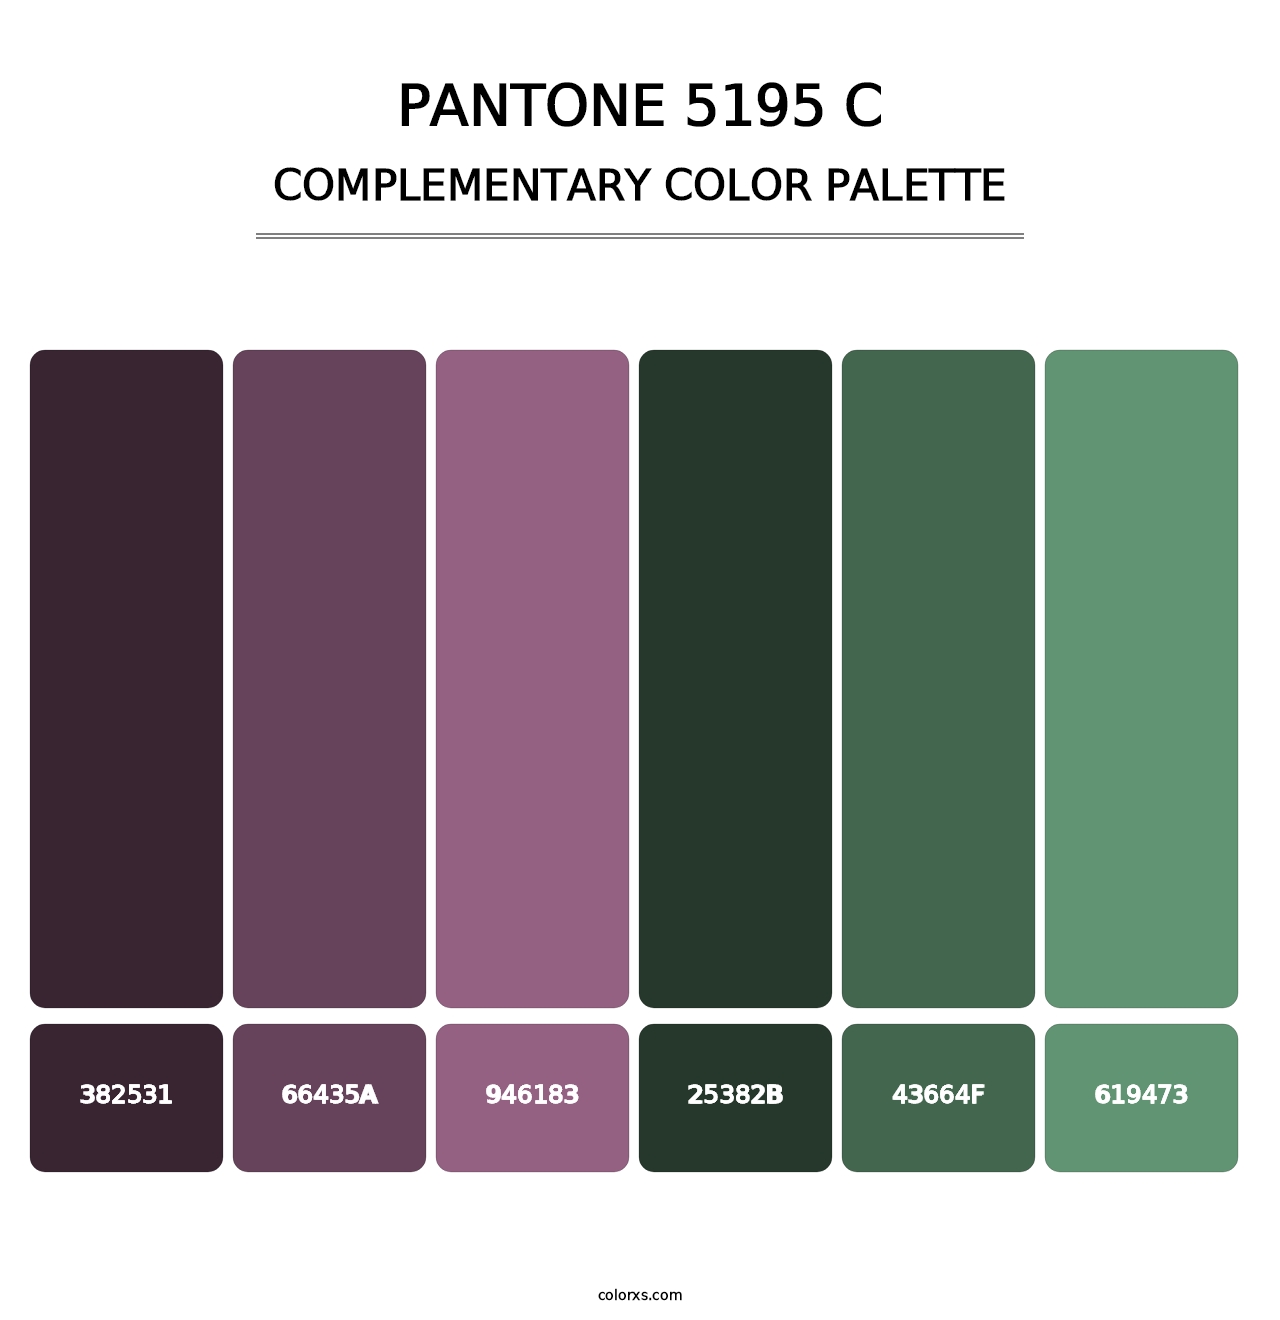 PANTONE 5195 C - Complementary Color Palette